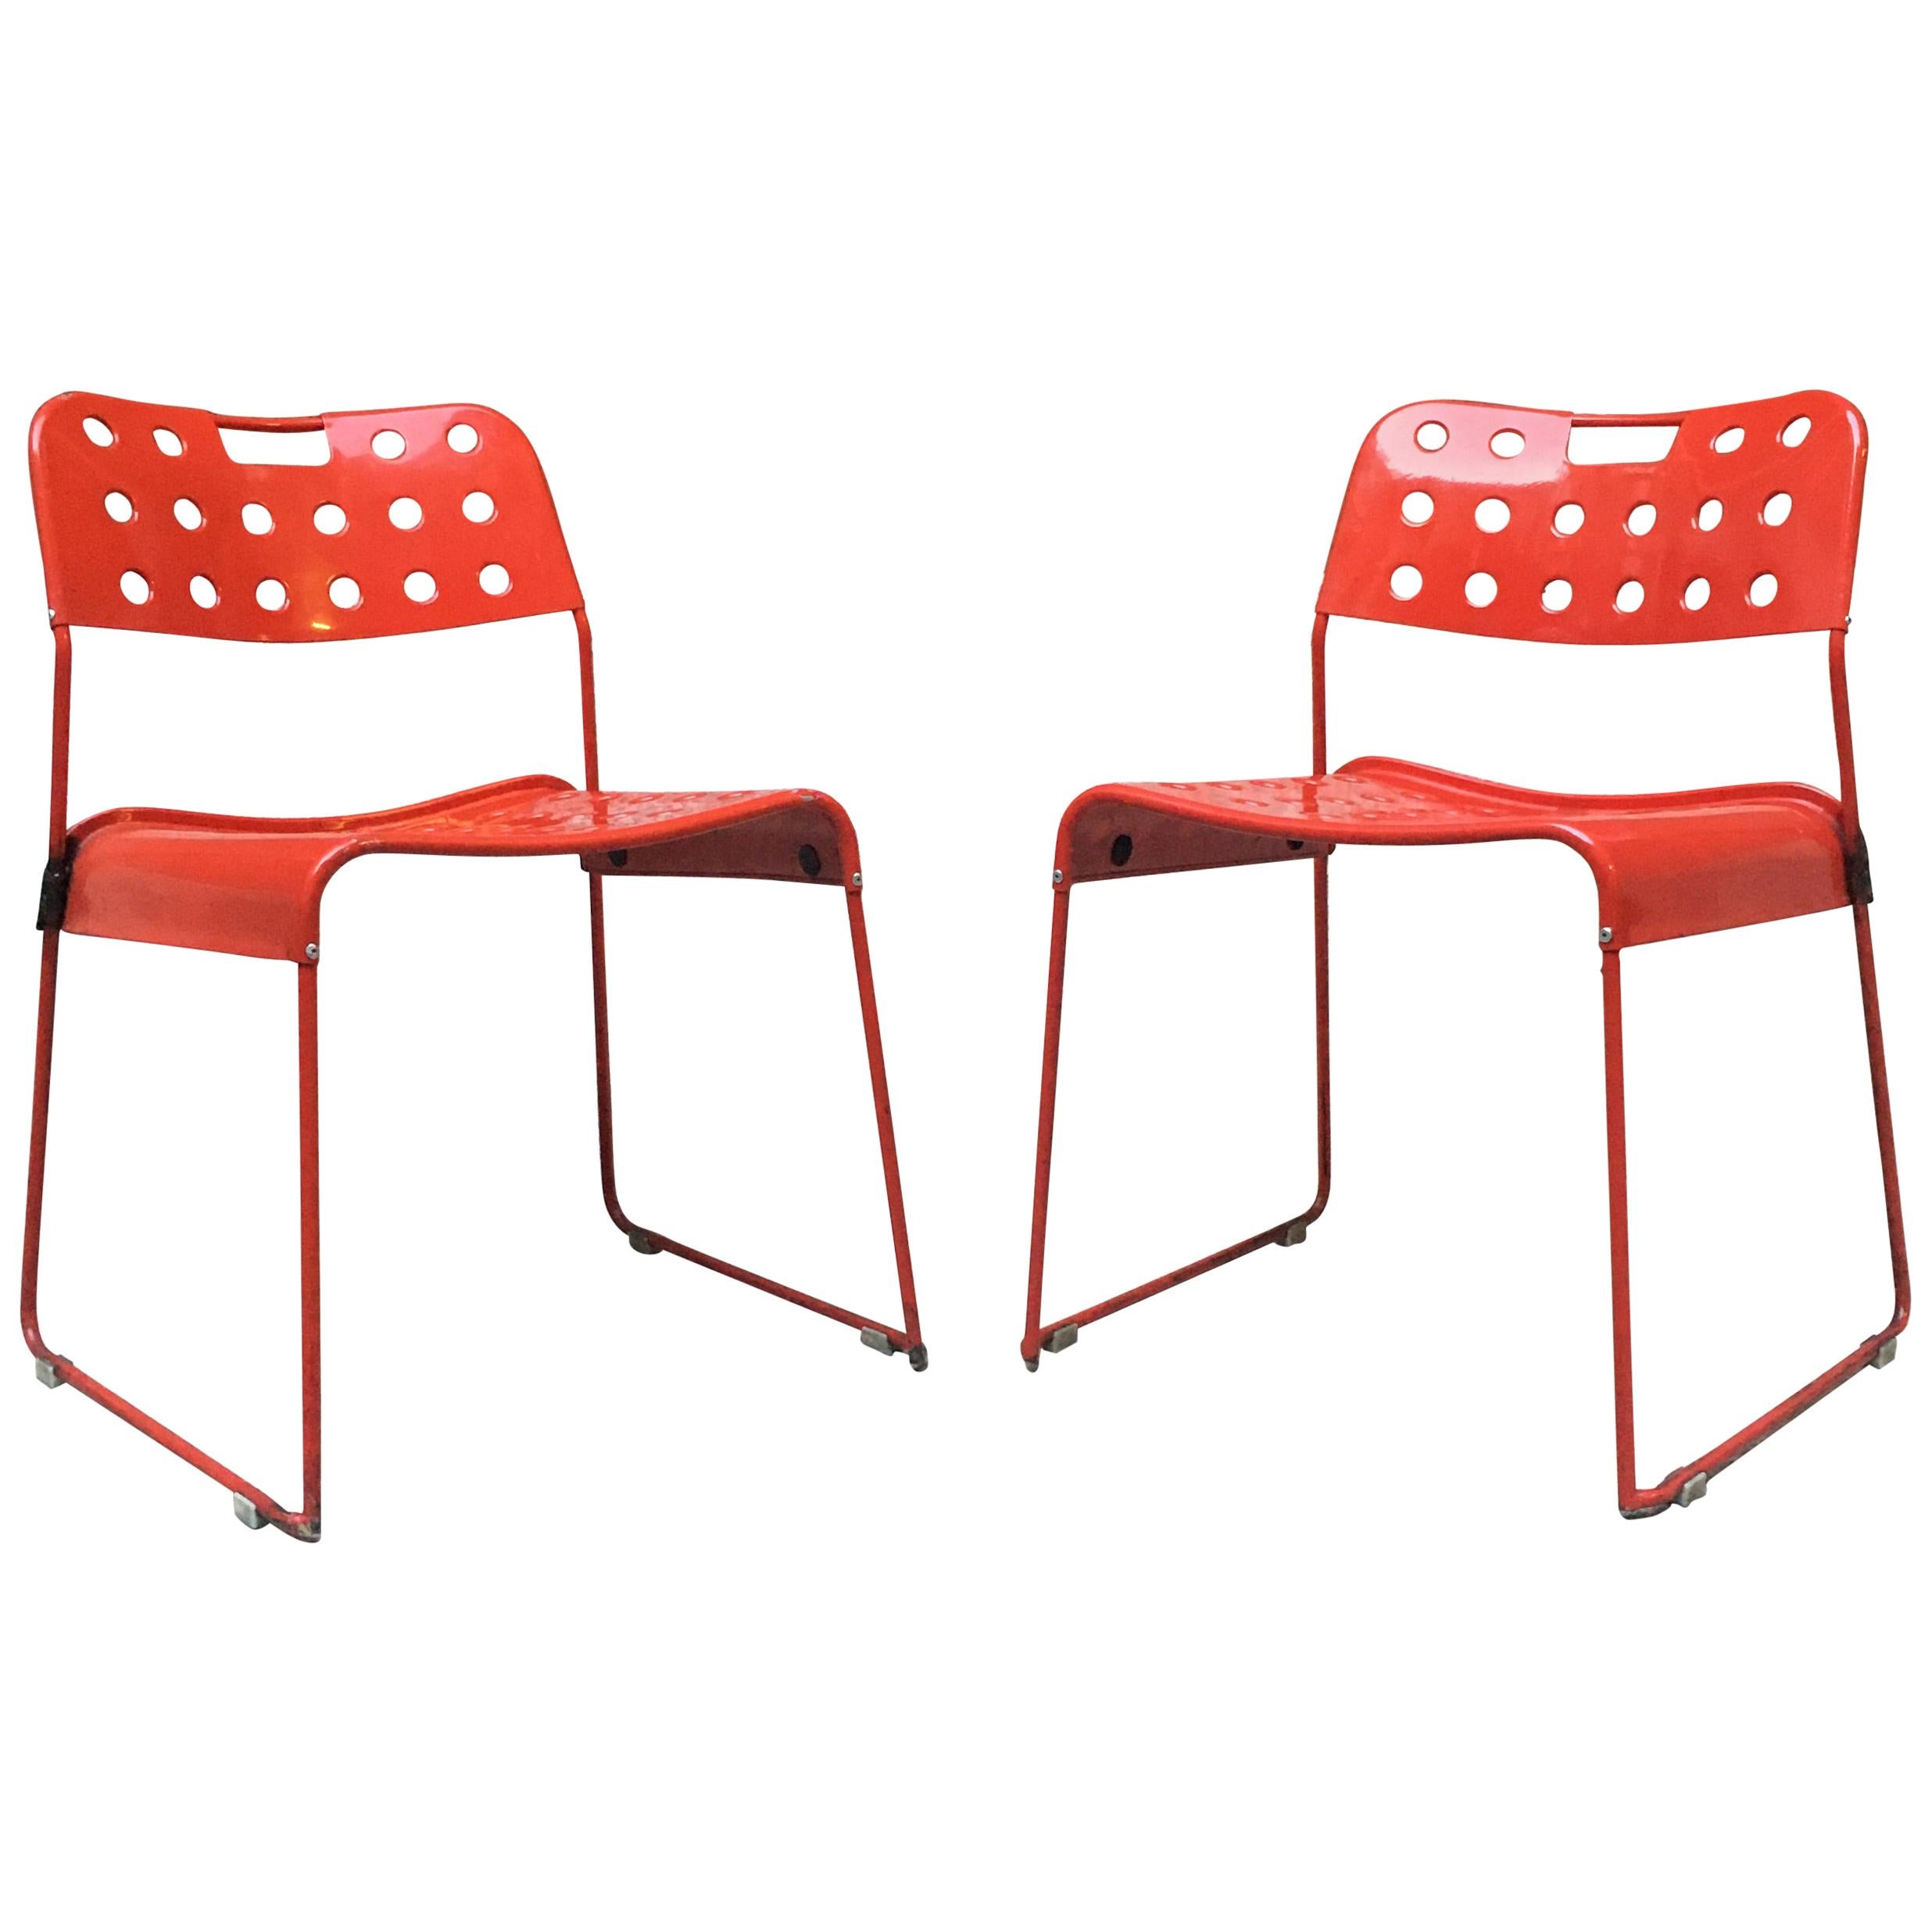 Mid-Century Modern Red Omstak Chairs by Rodney Kinsman for Bieffeplast, 1972